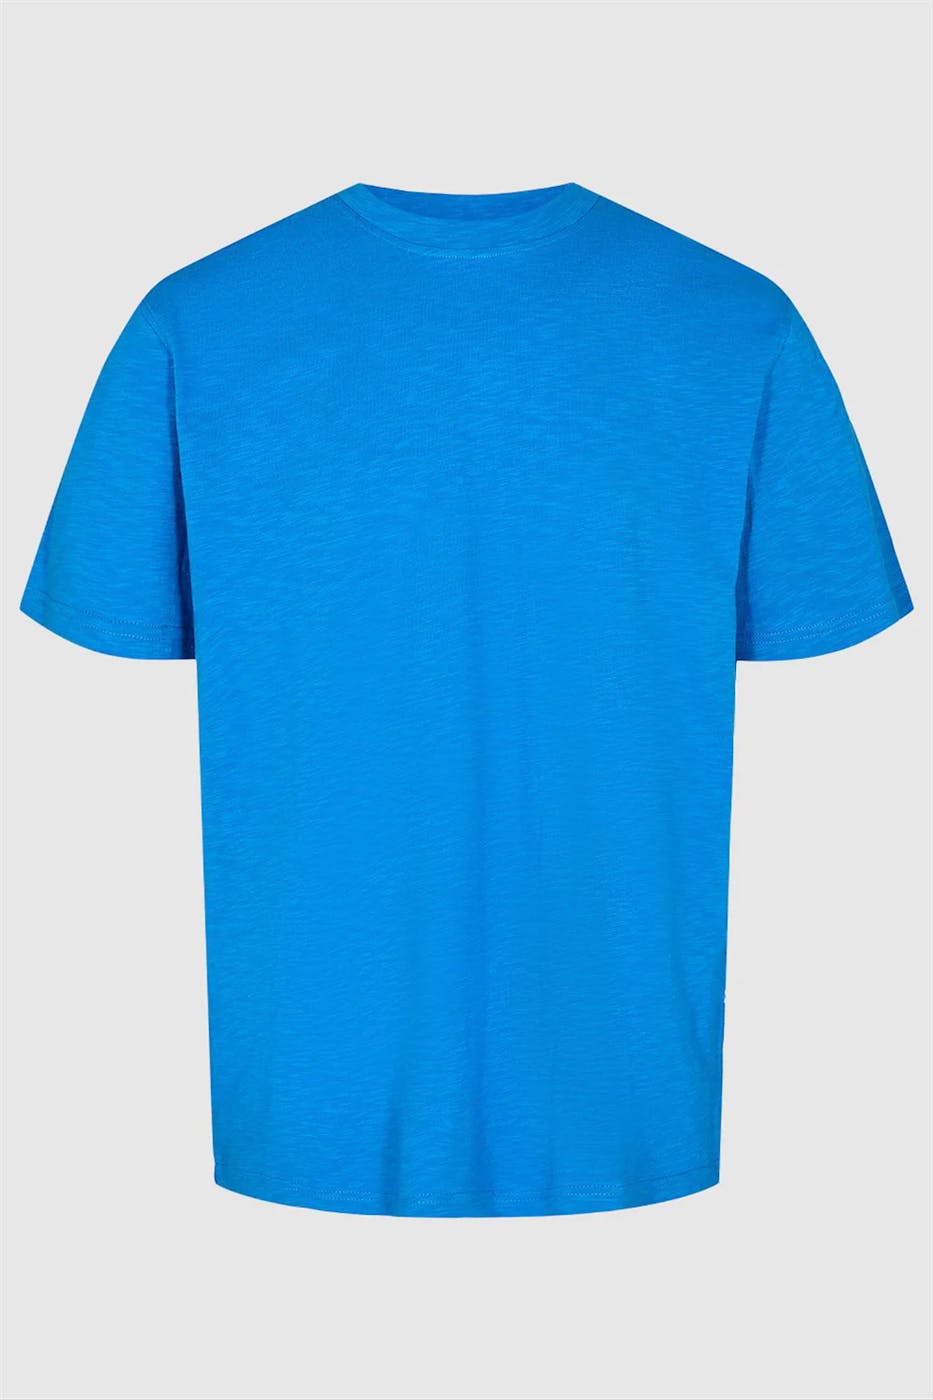 Minimum - Hemelsblauwe Heon t-shirt